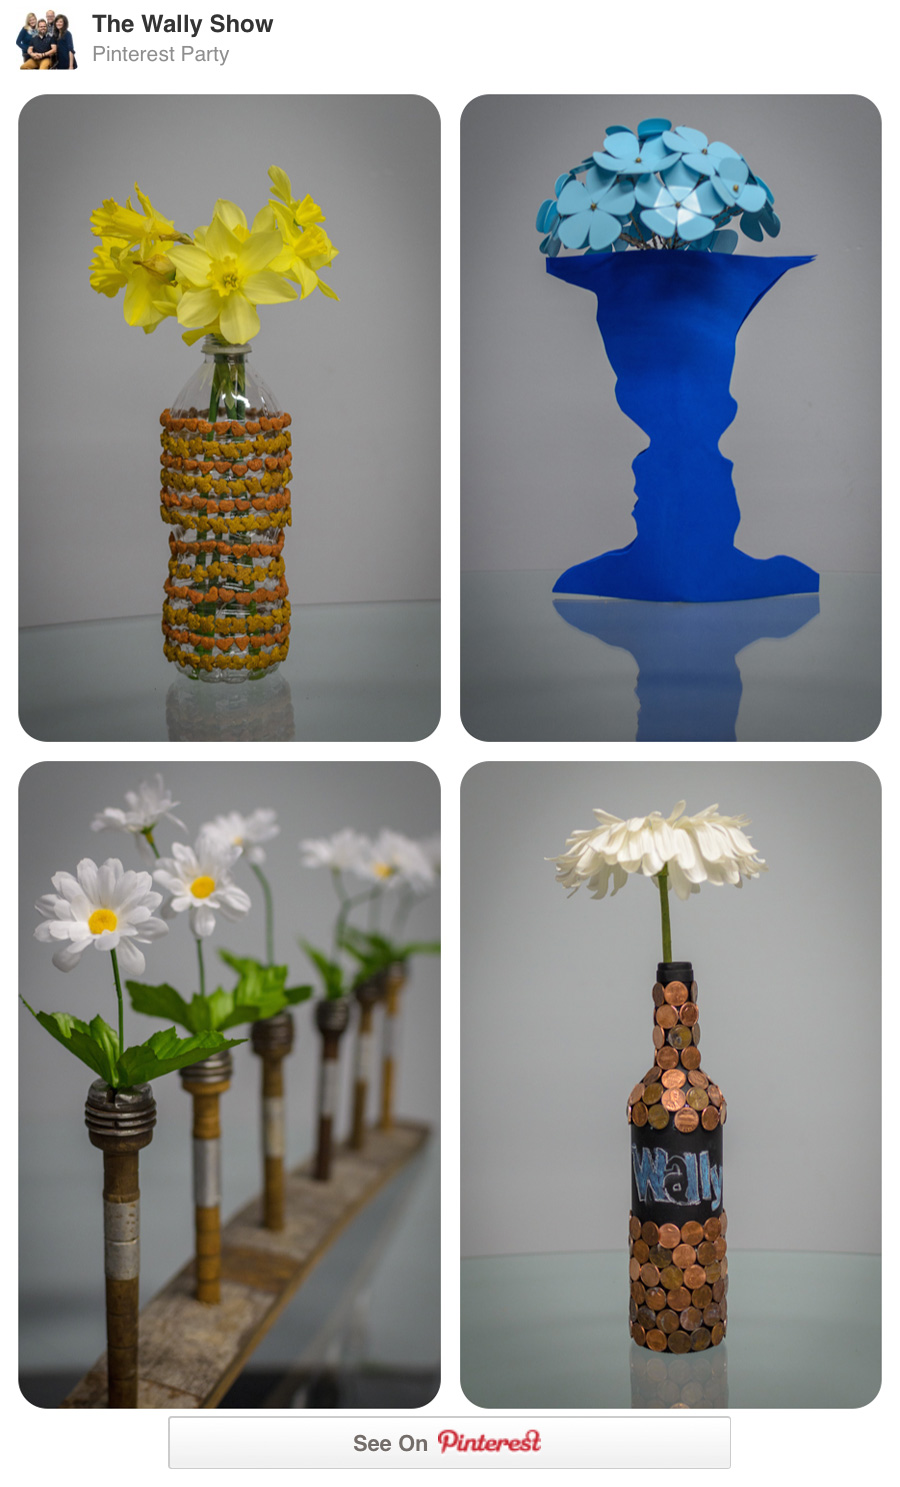 Pinterest-Party-Vases